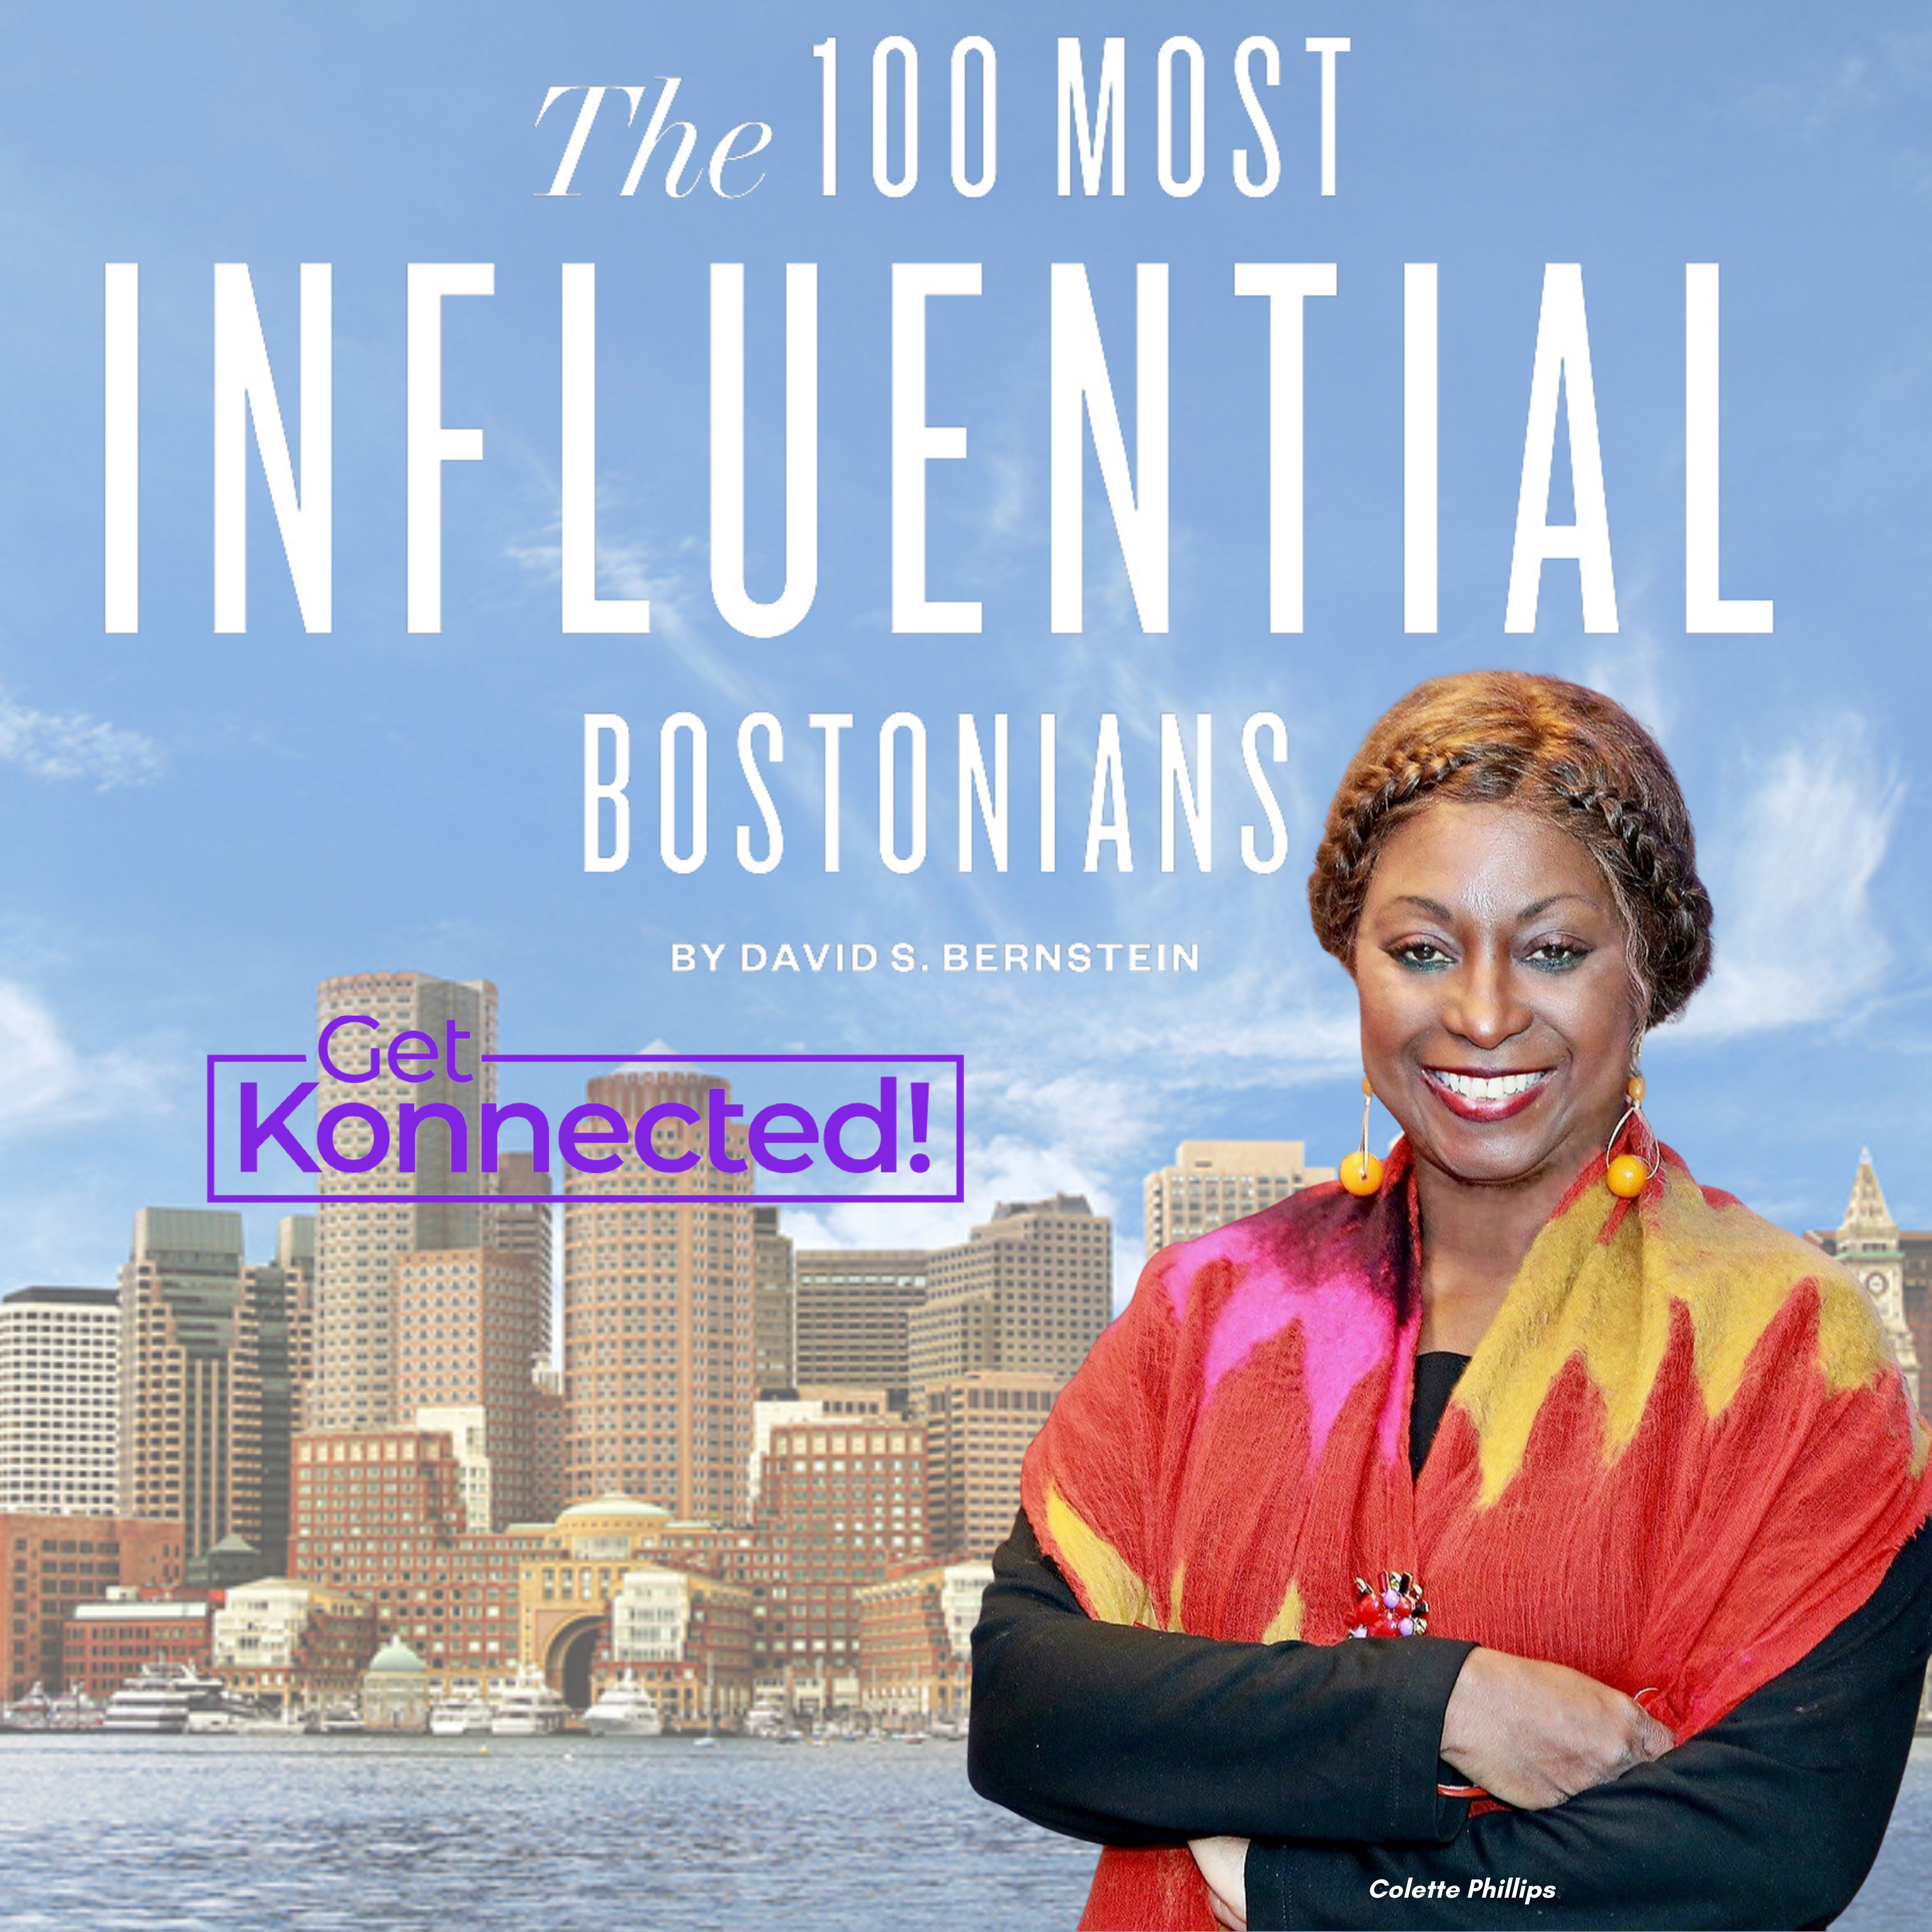 Article by Boston Magazine regarding Boston Magazine's 100 Most Influential Bostonians: List of GK! Honorees 